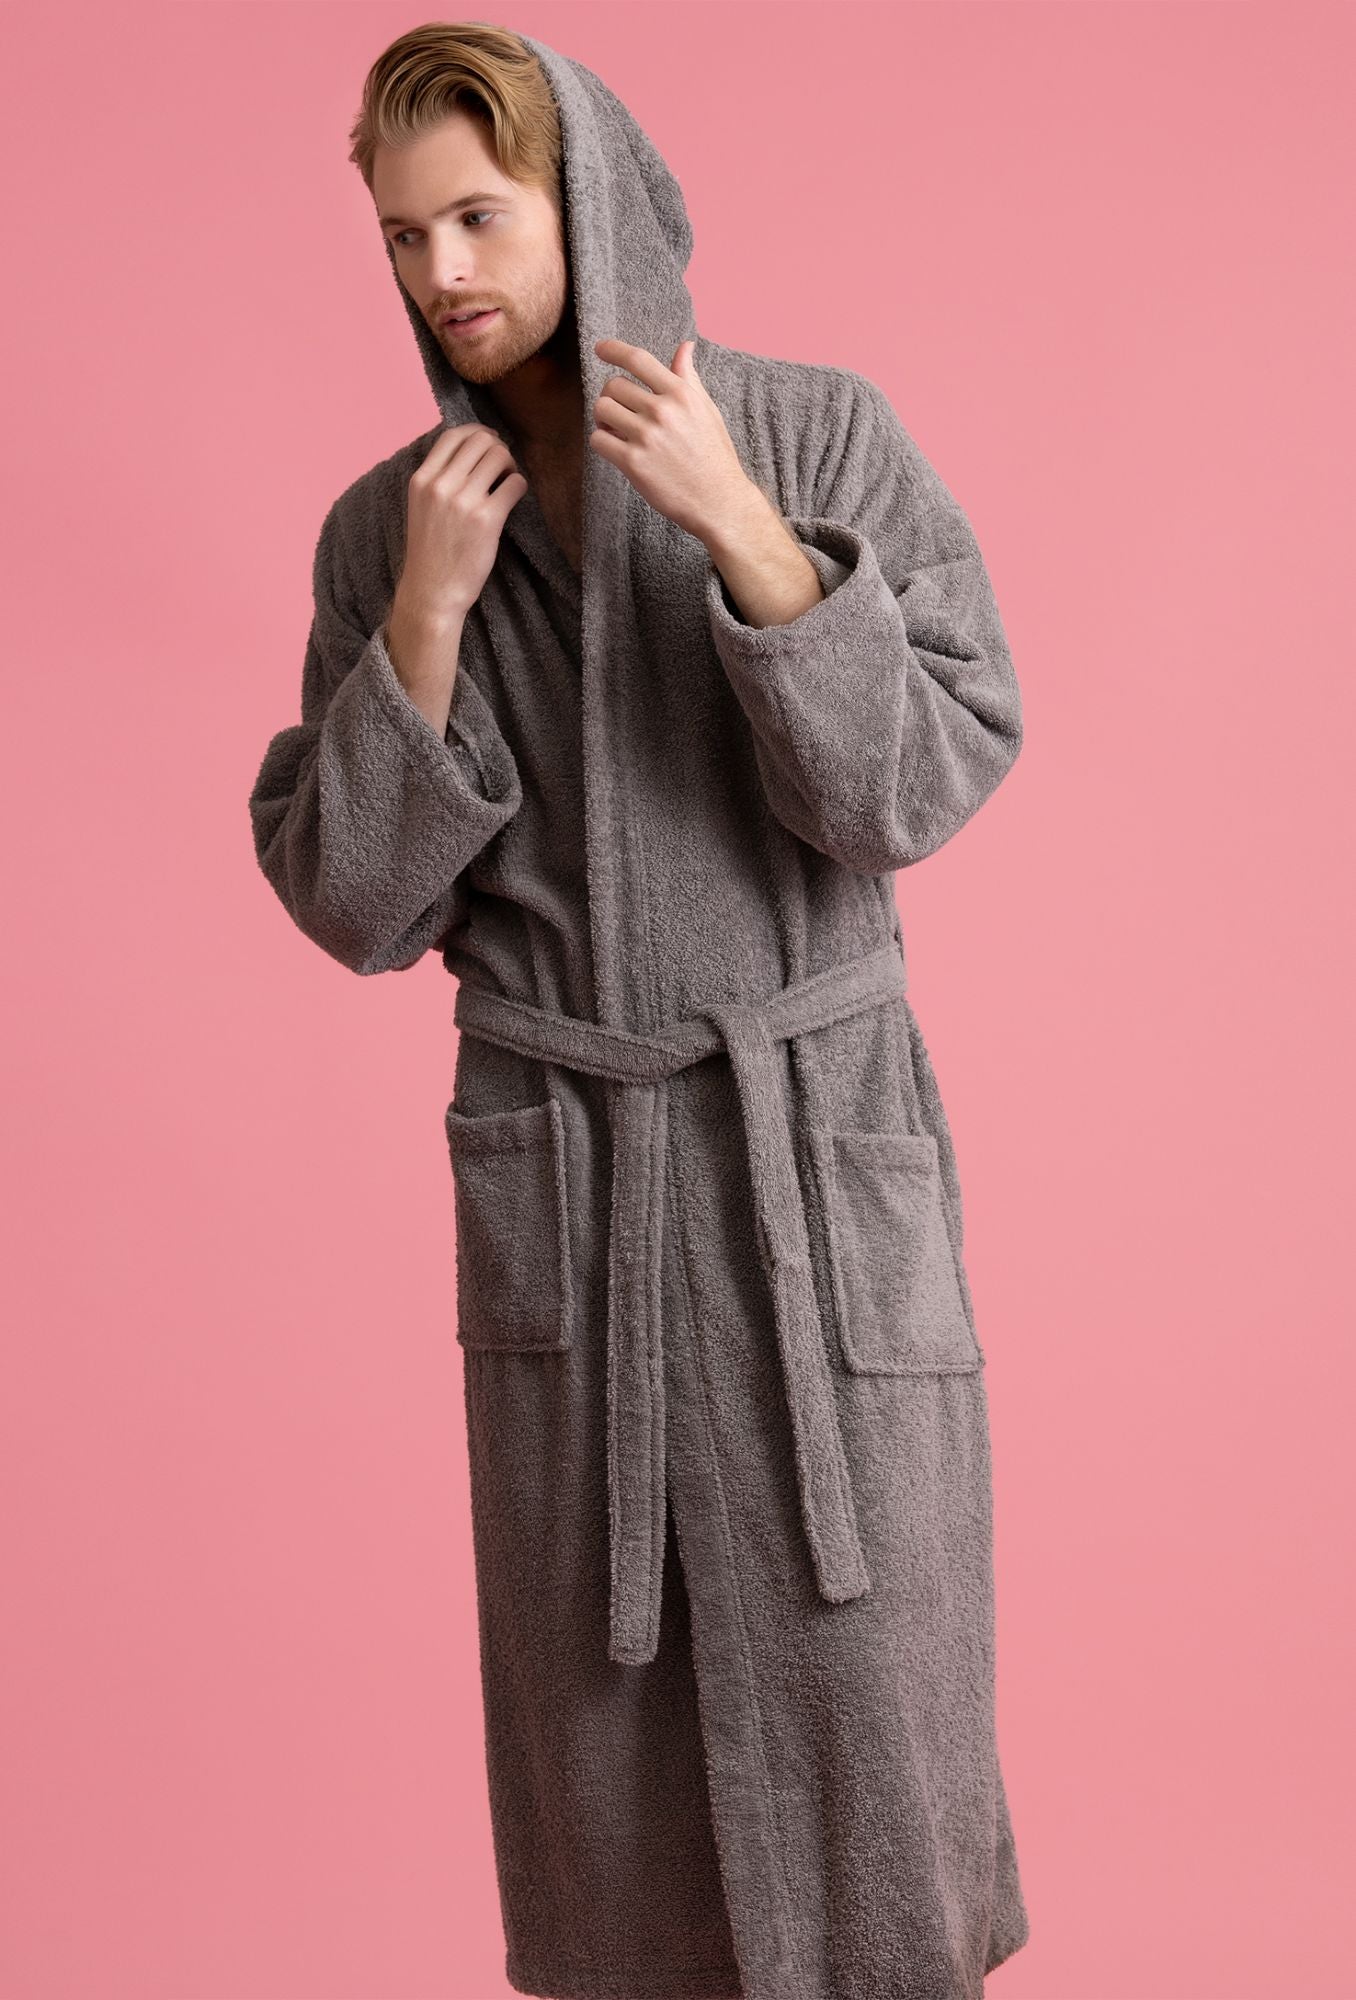 Men's Hooded Robe, Turkish Cotton Terry Hooded Spa Black Bathrobe